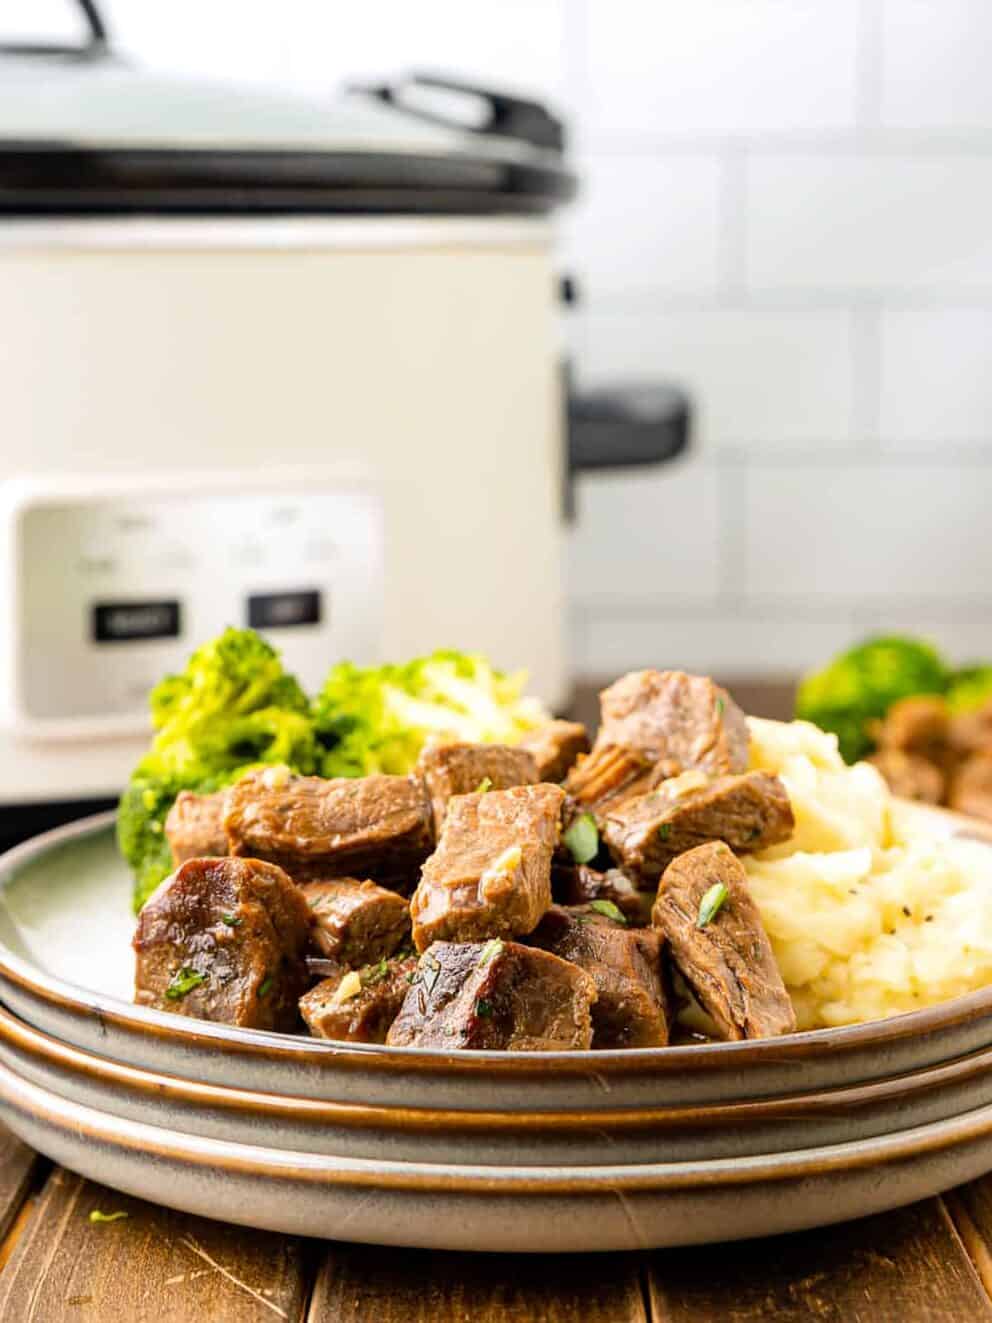 How to Cook Slow Cooker Steak Recipes, Crock-Pot Steak